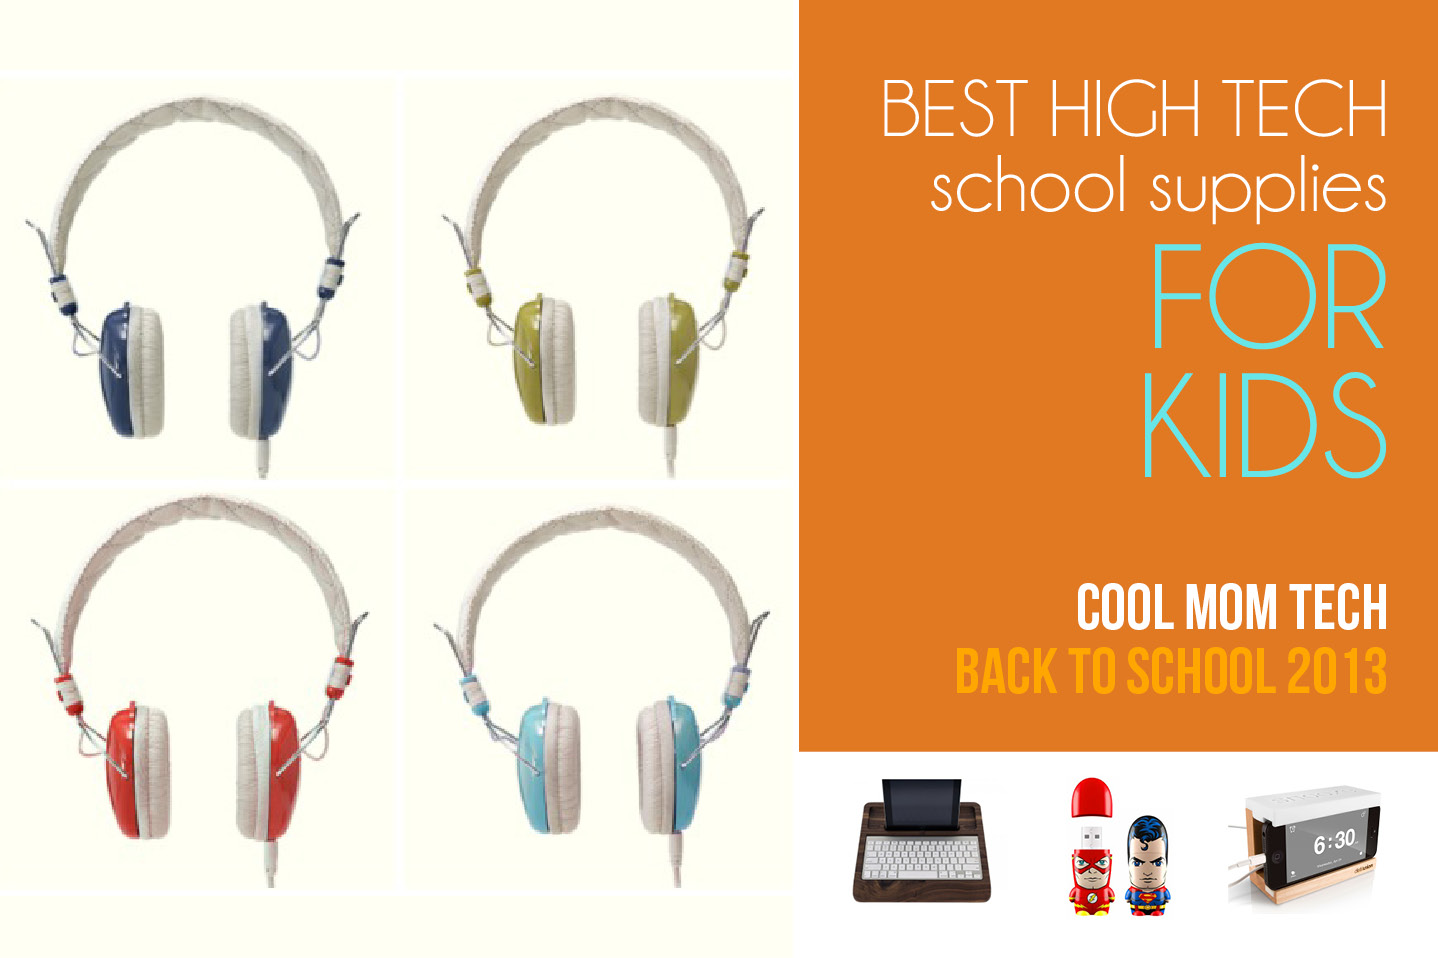 High tech school supplies: Back to School Tech Guide 2013